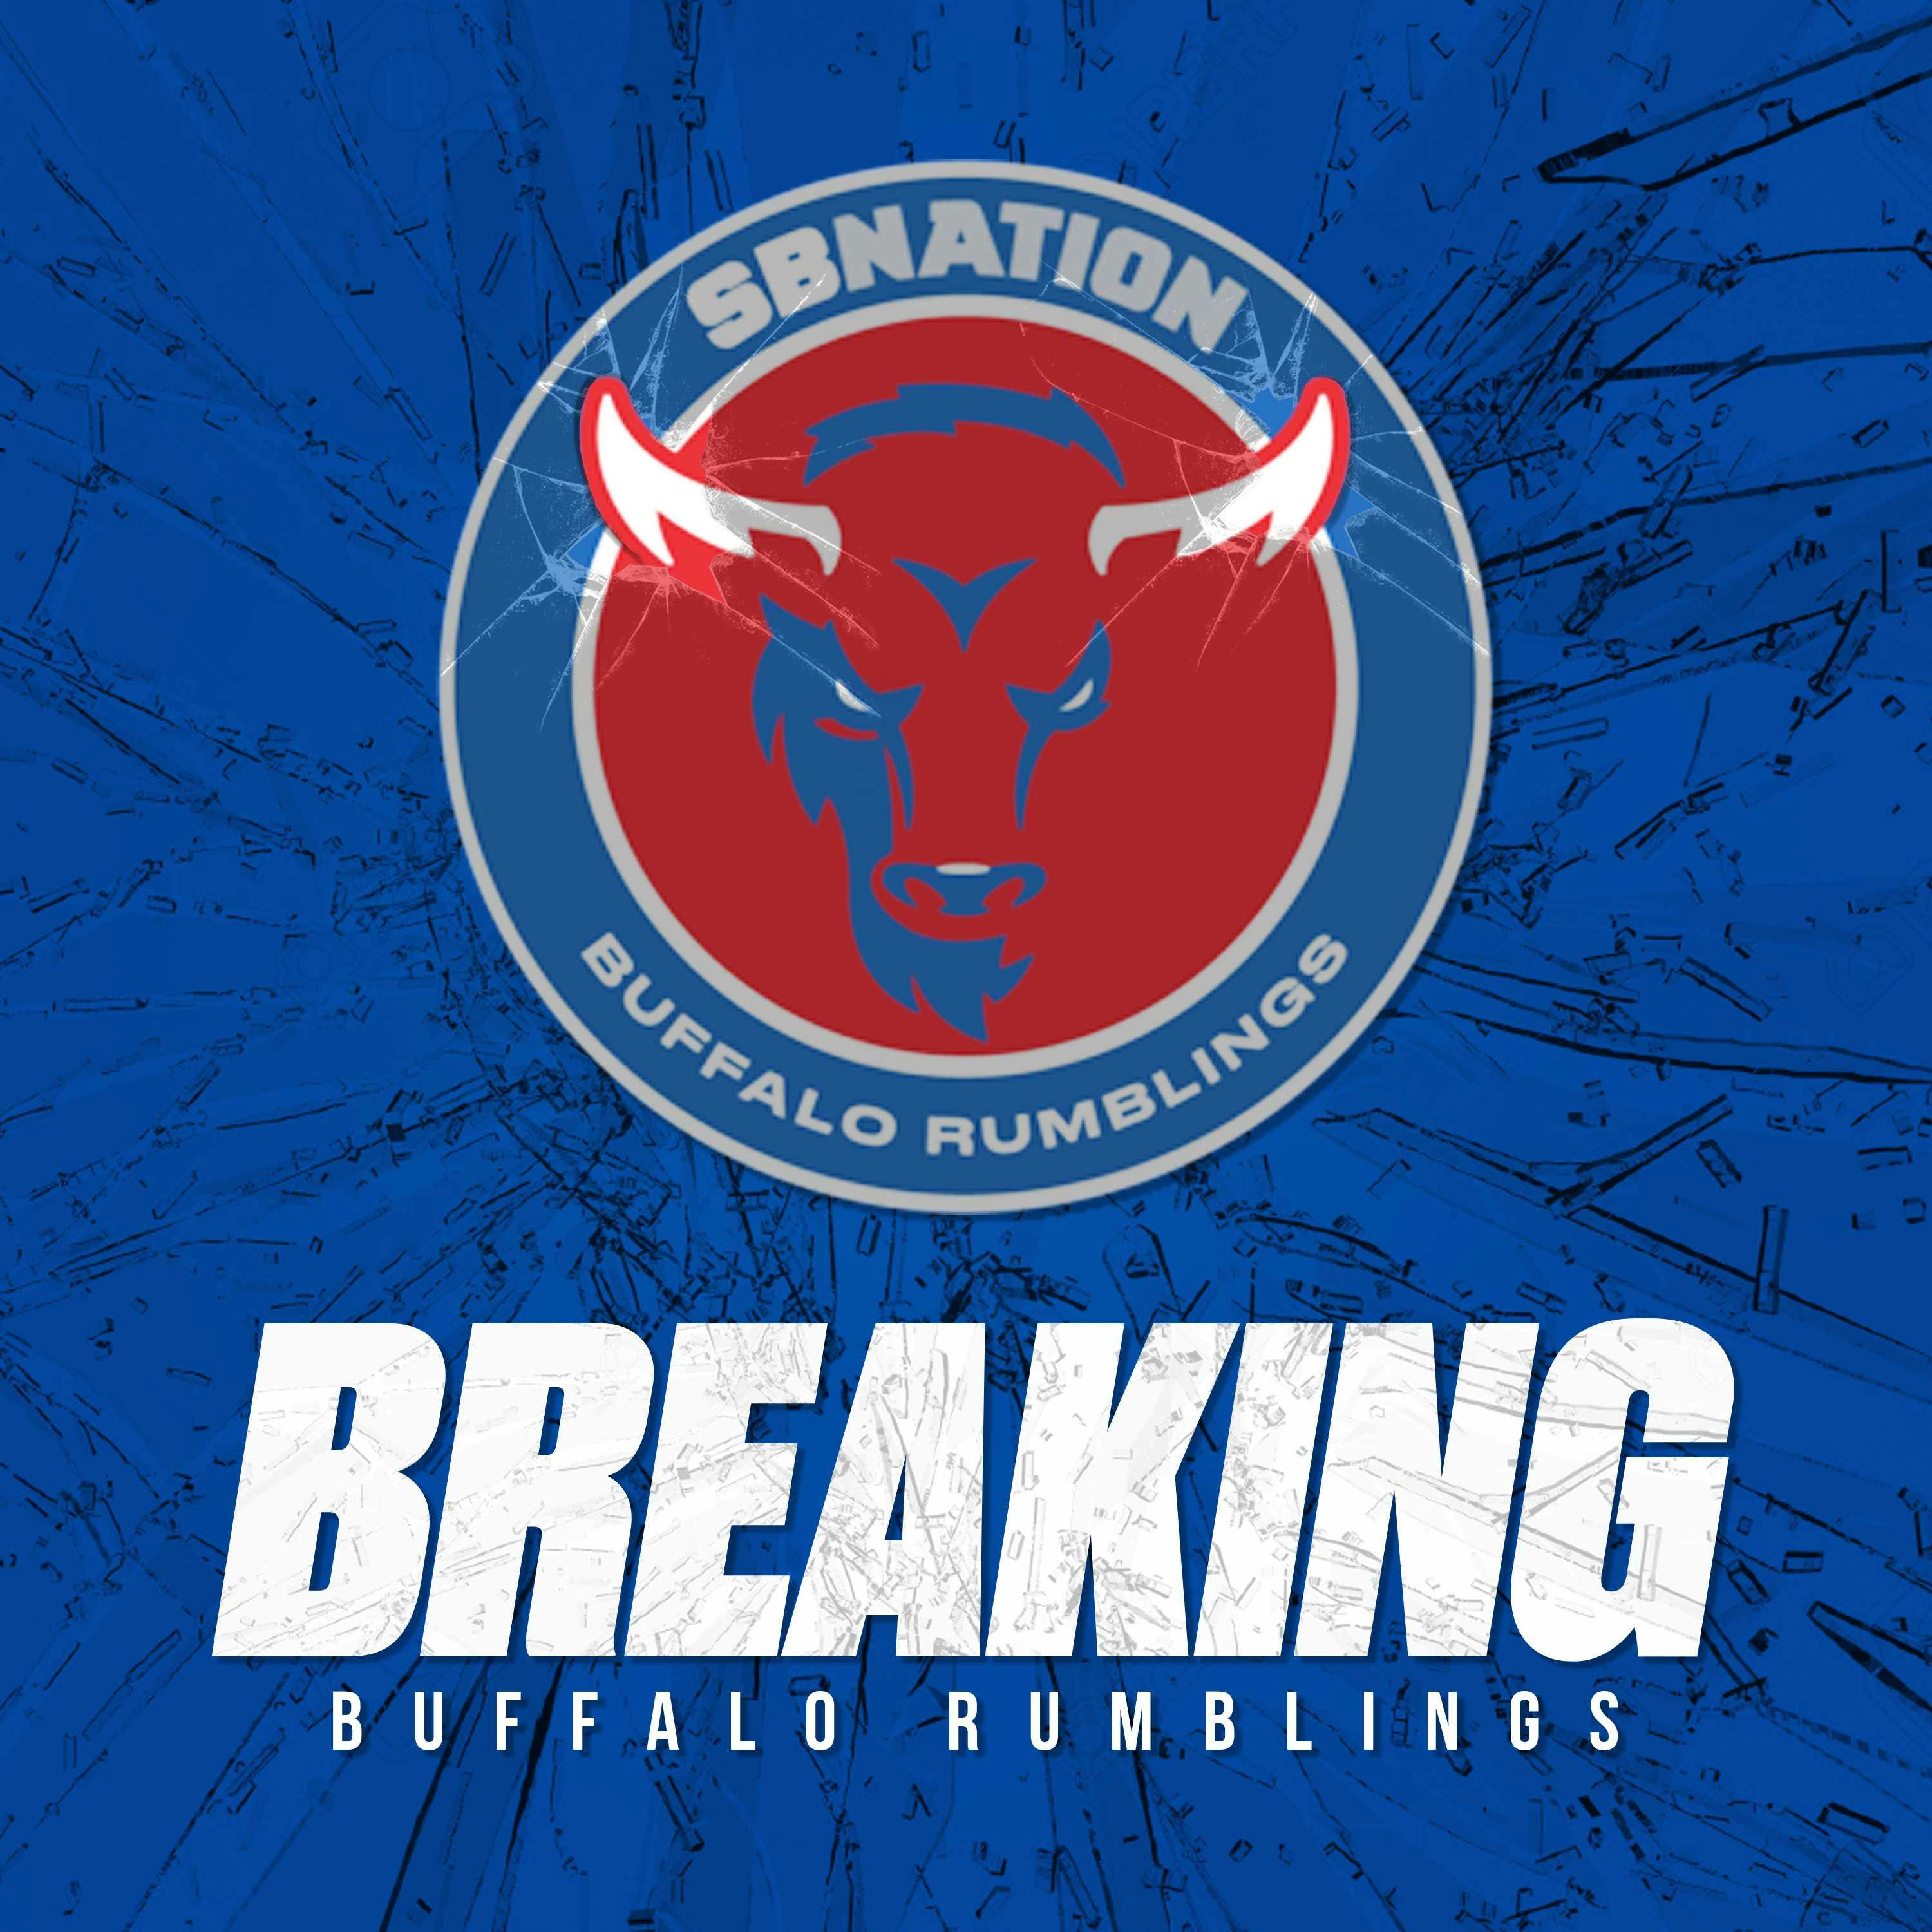 BBR: Buffalo Bills standouts during the 3 -game win streak